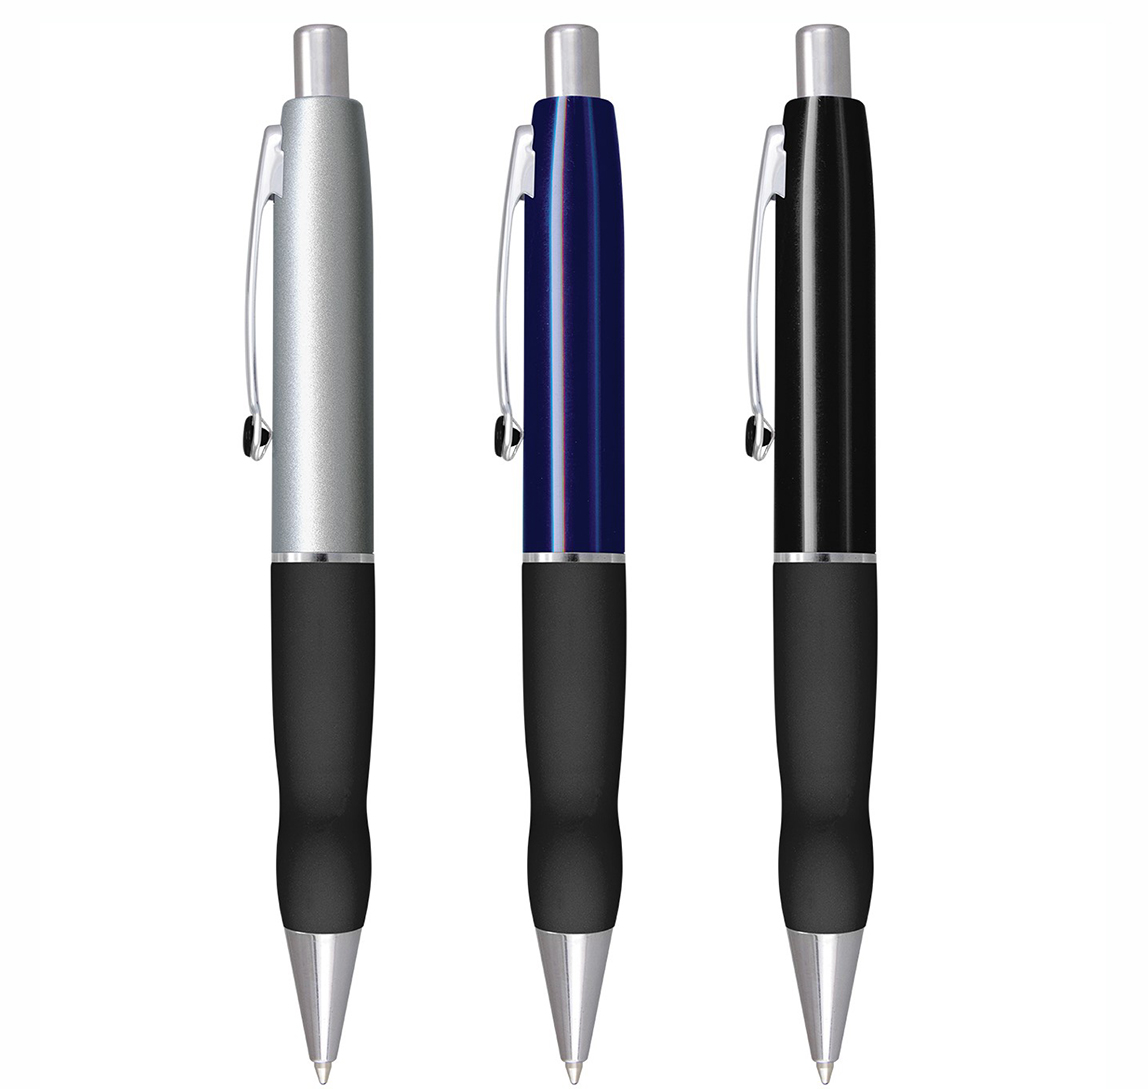 Turbo Pen - Classic Features